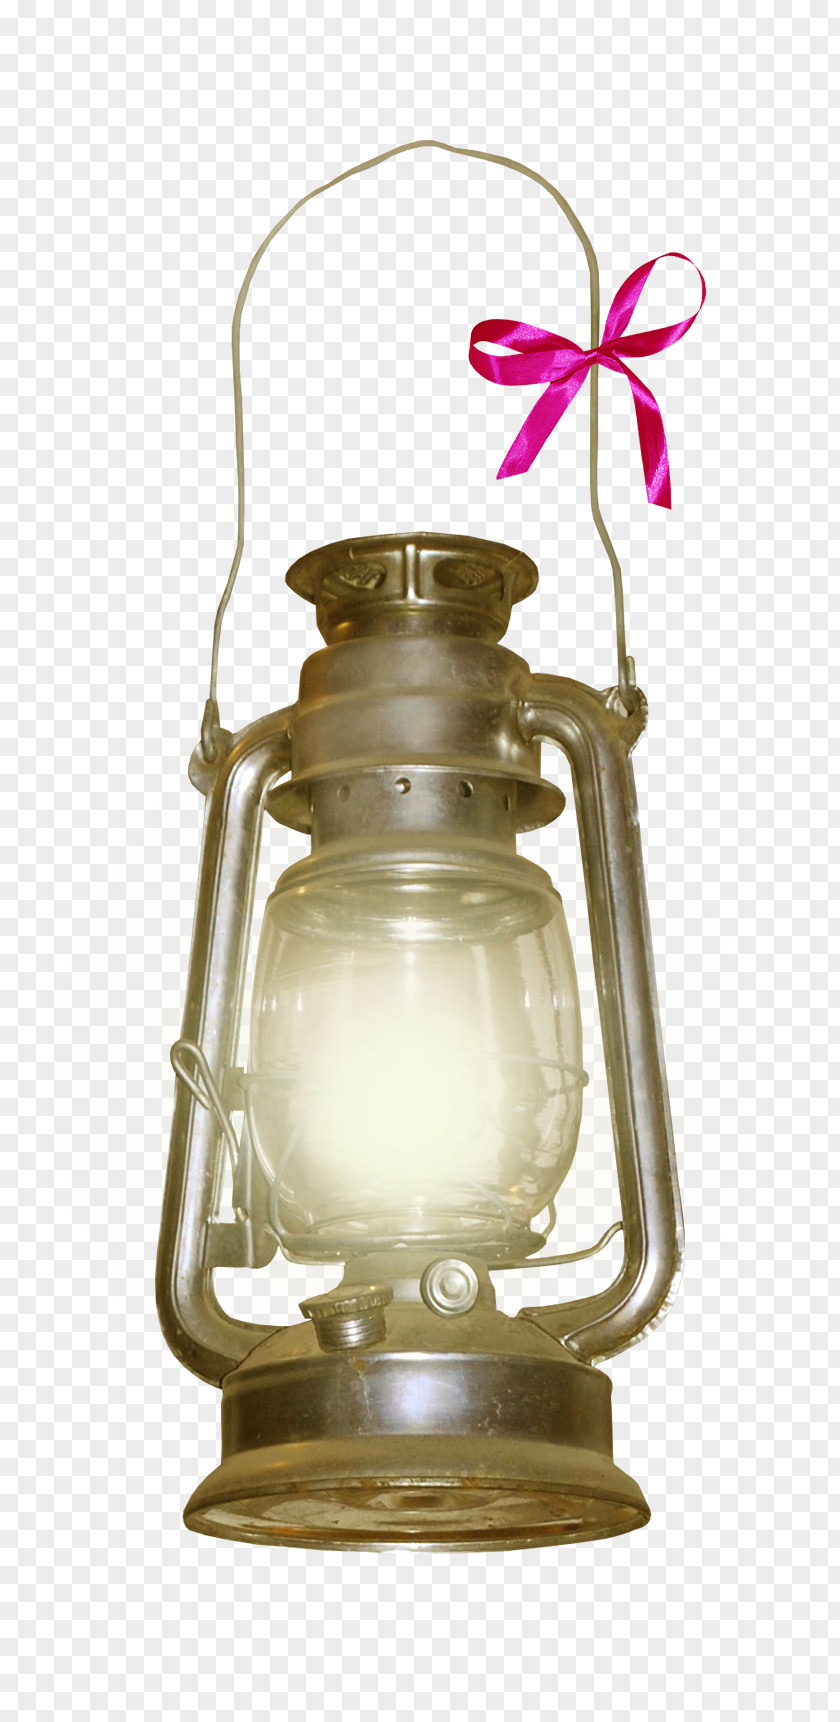 Pink Bow Cloth Decorative Lamps Lighting Light Fixture Lantern Lamp PNG